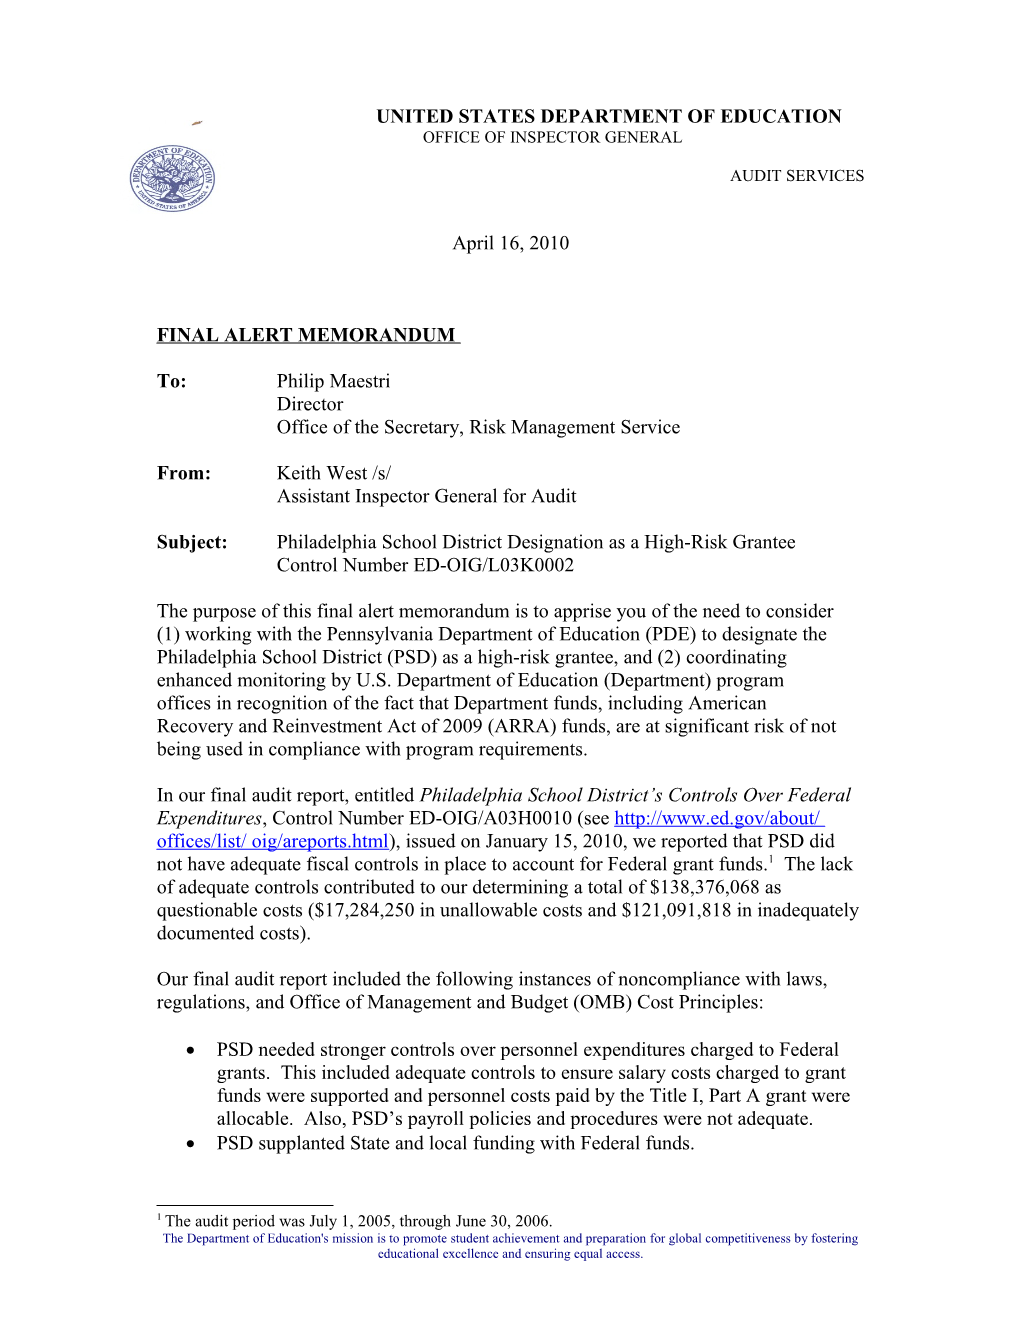 L03K0002 - Philadelphia School District's Controls Over Federal Expenditures (MS Word)